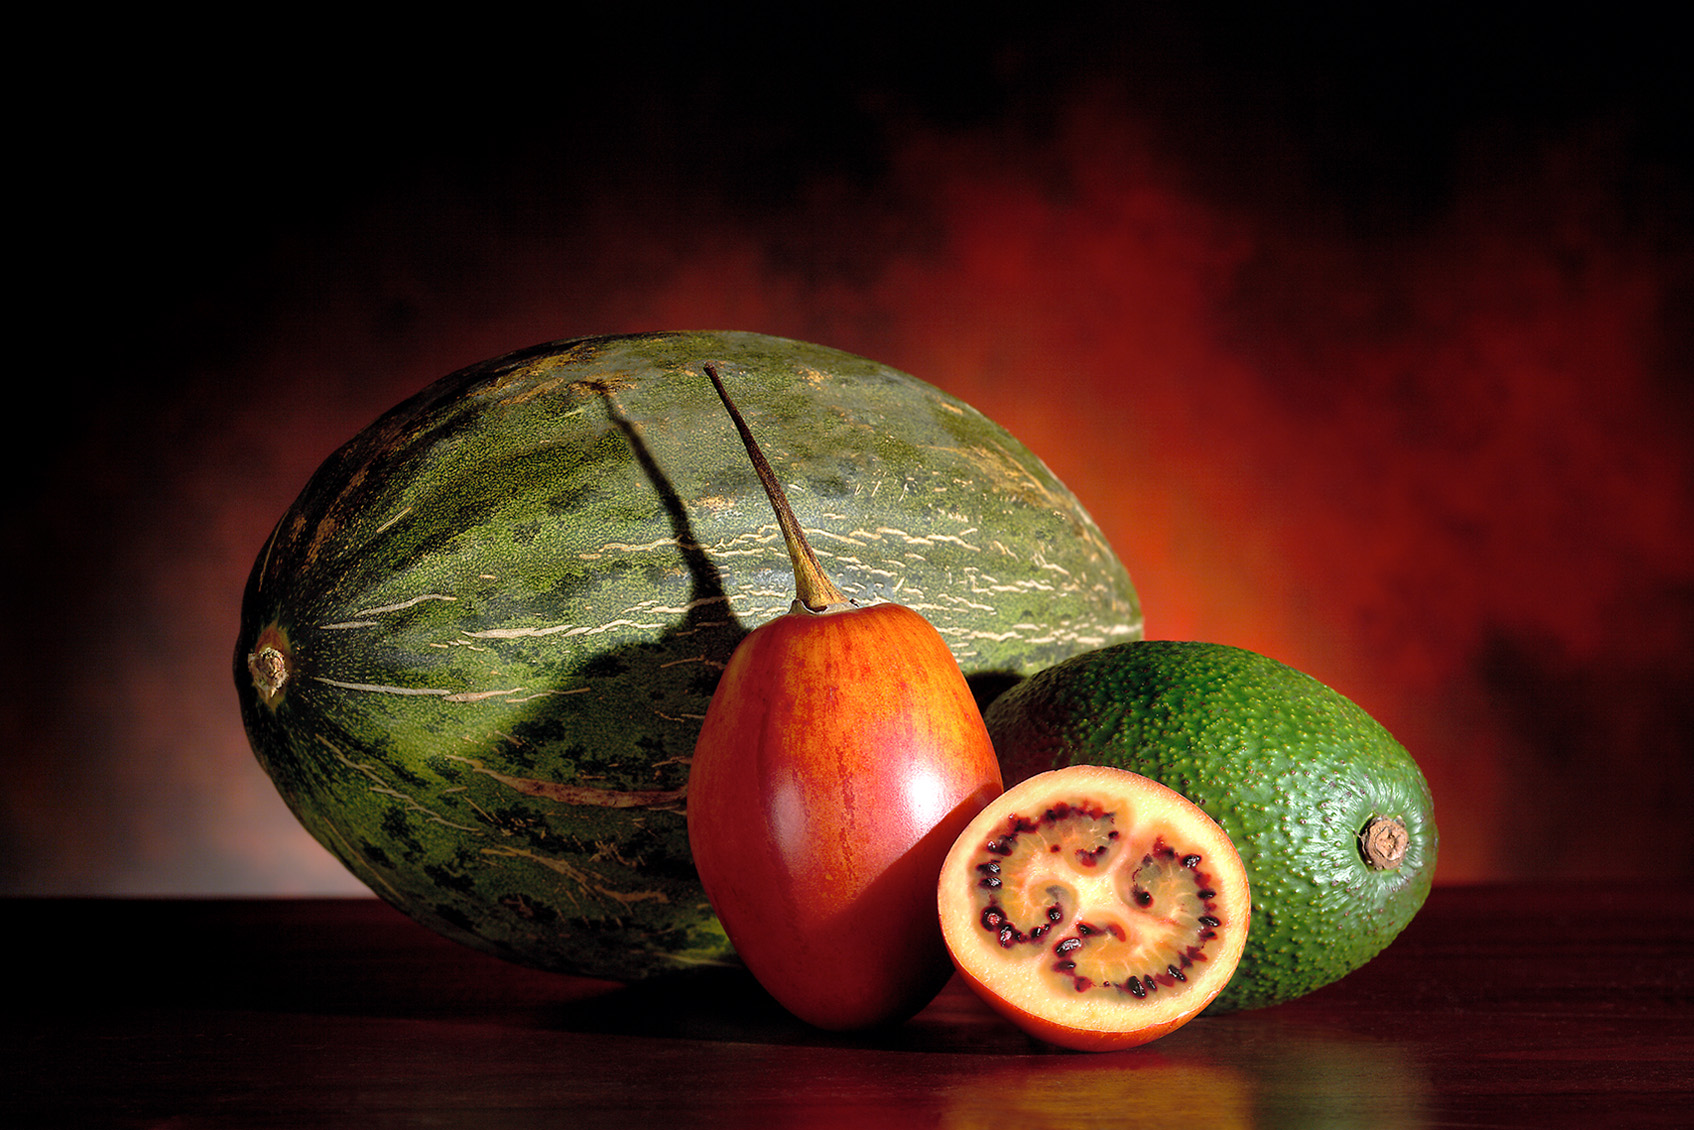 editorial - fruits - tamarillo, avocado, papaya